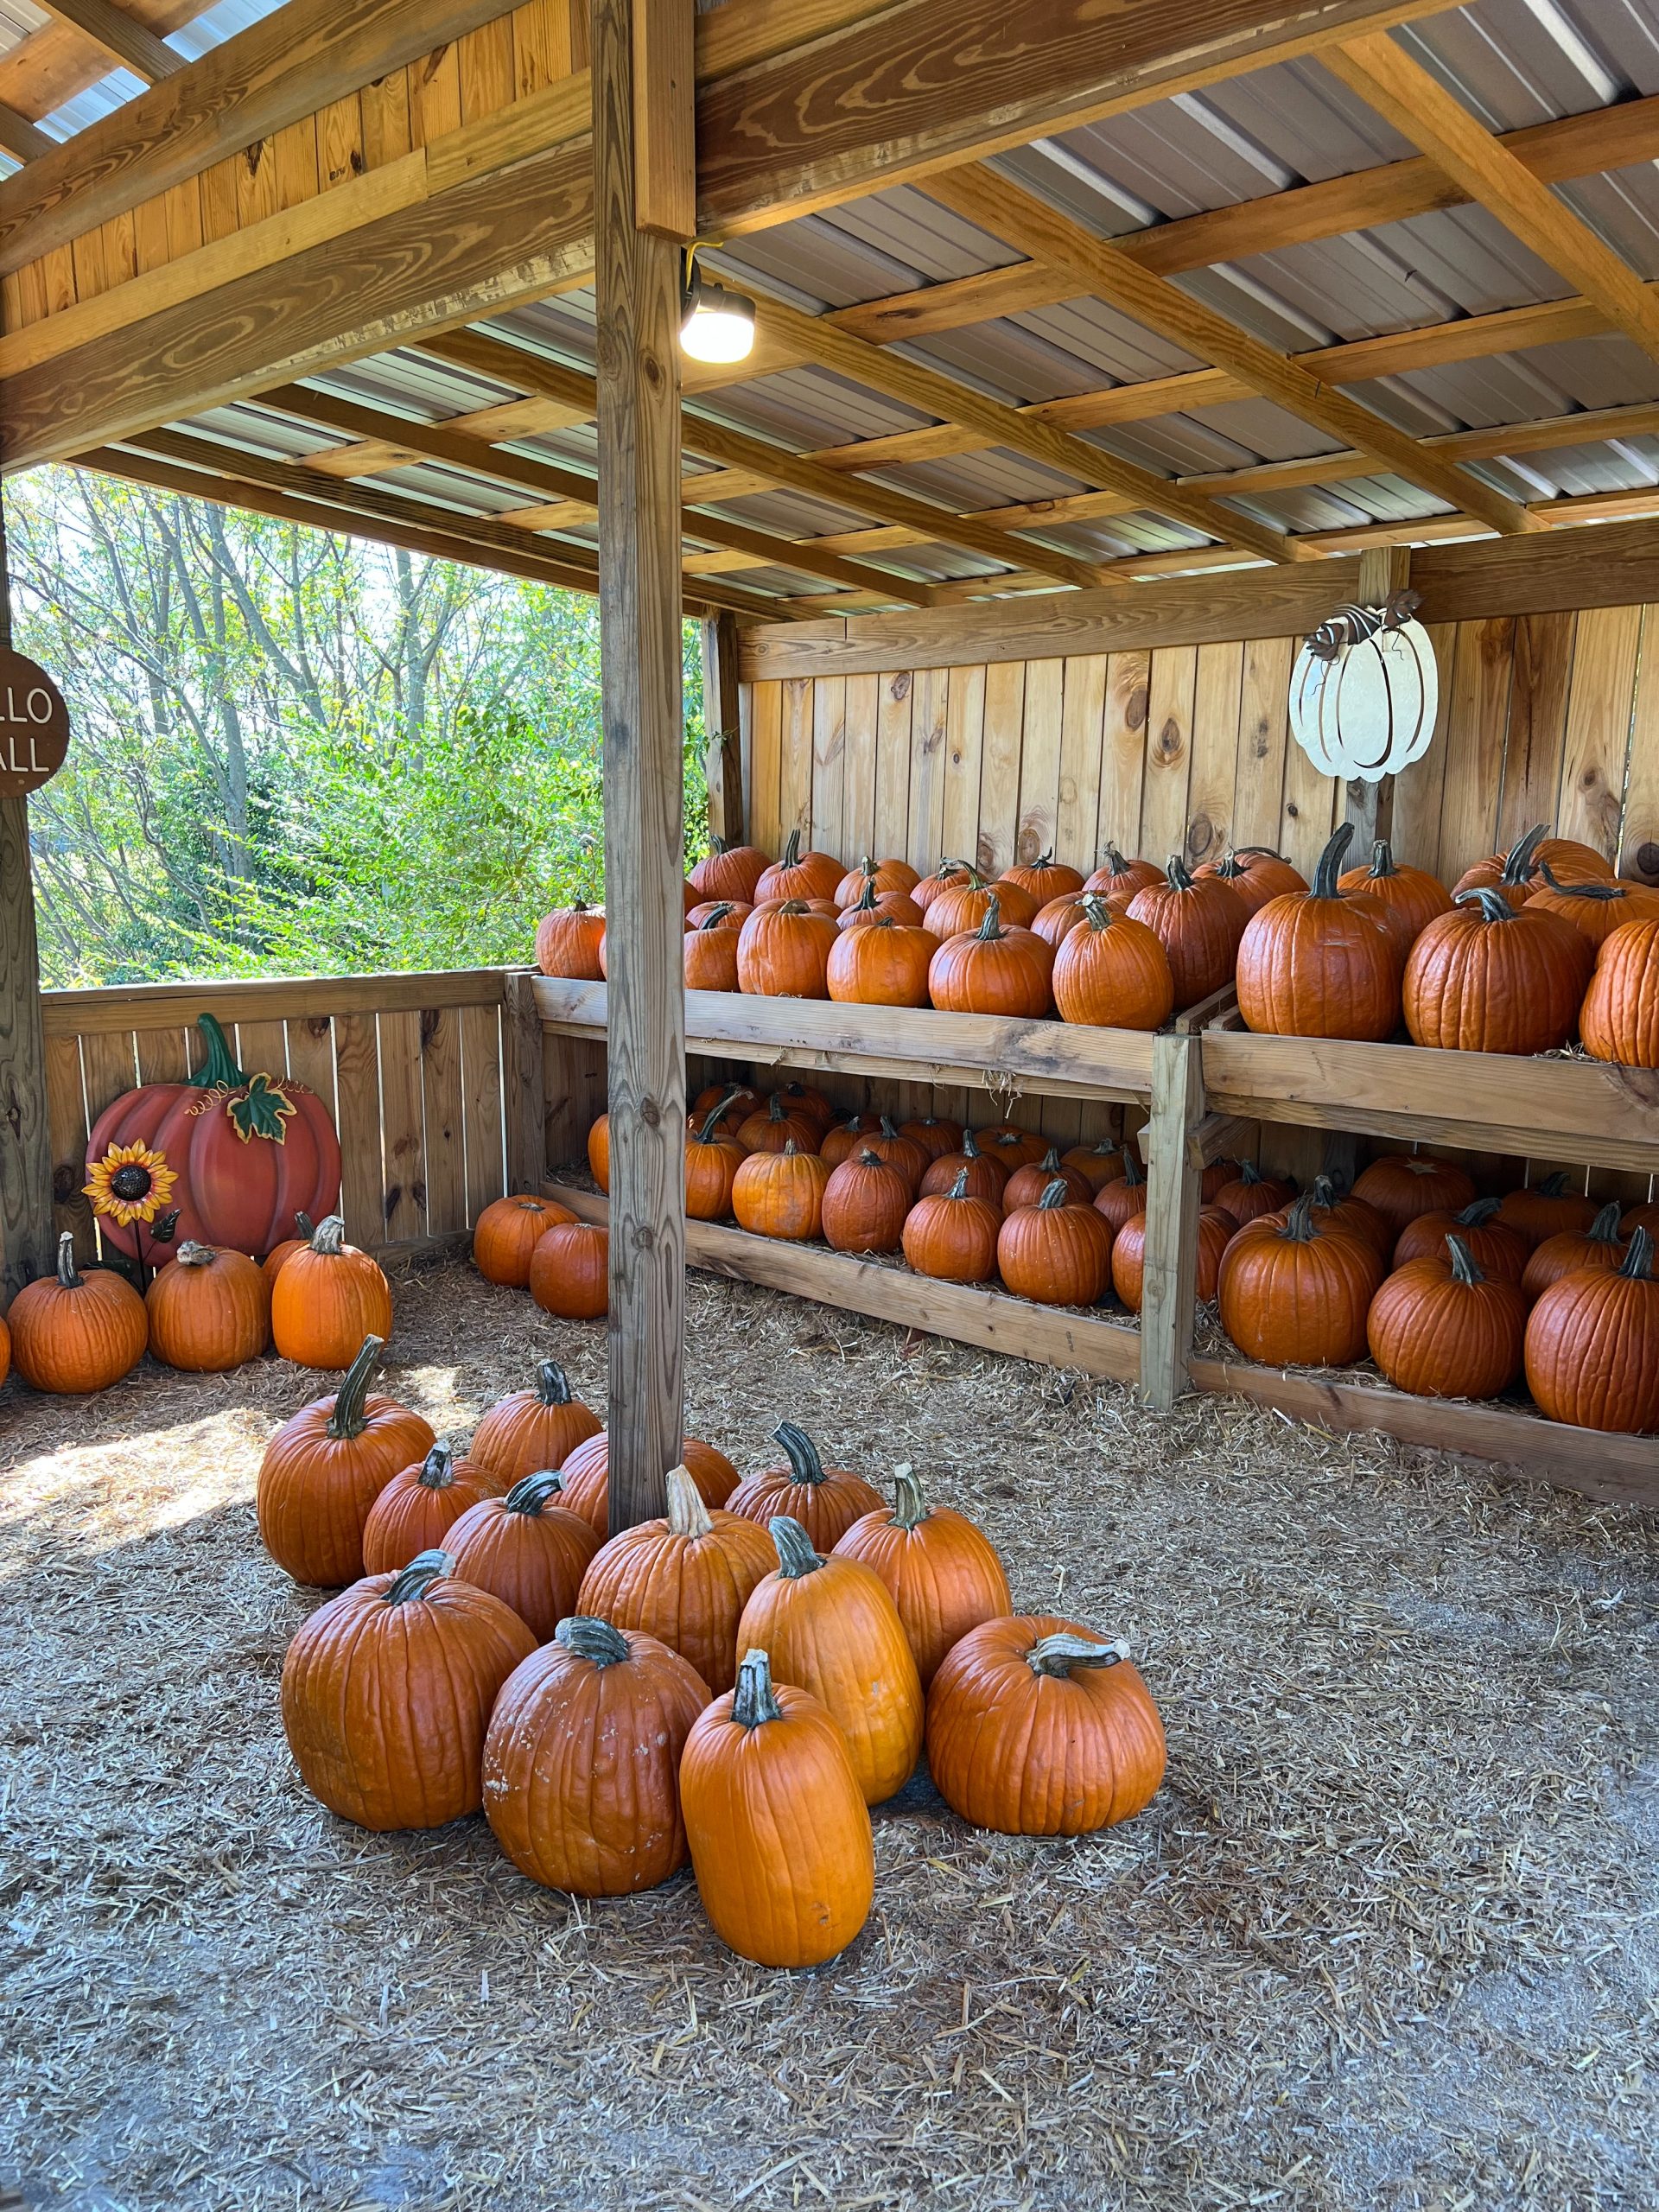 Stacks of pumpkins